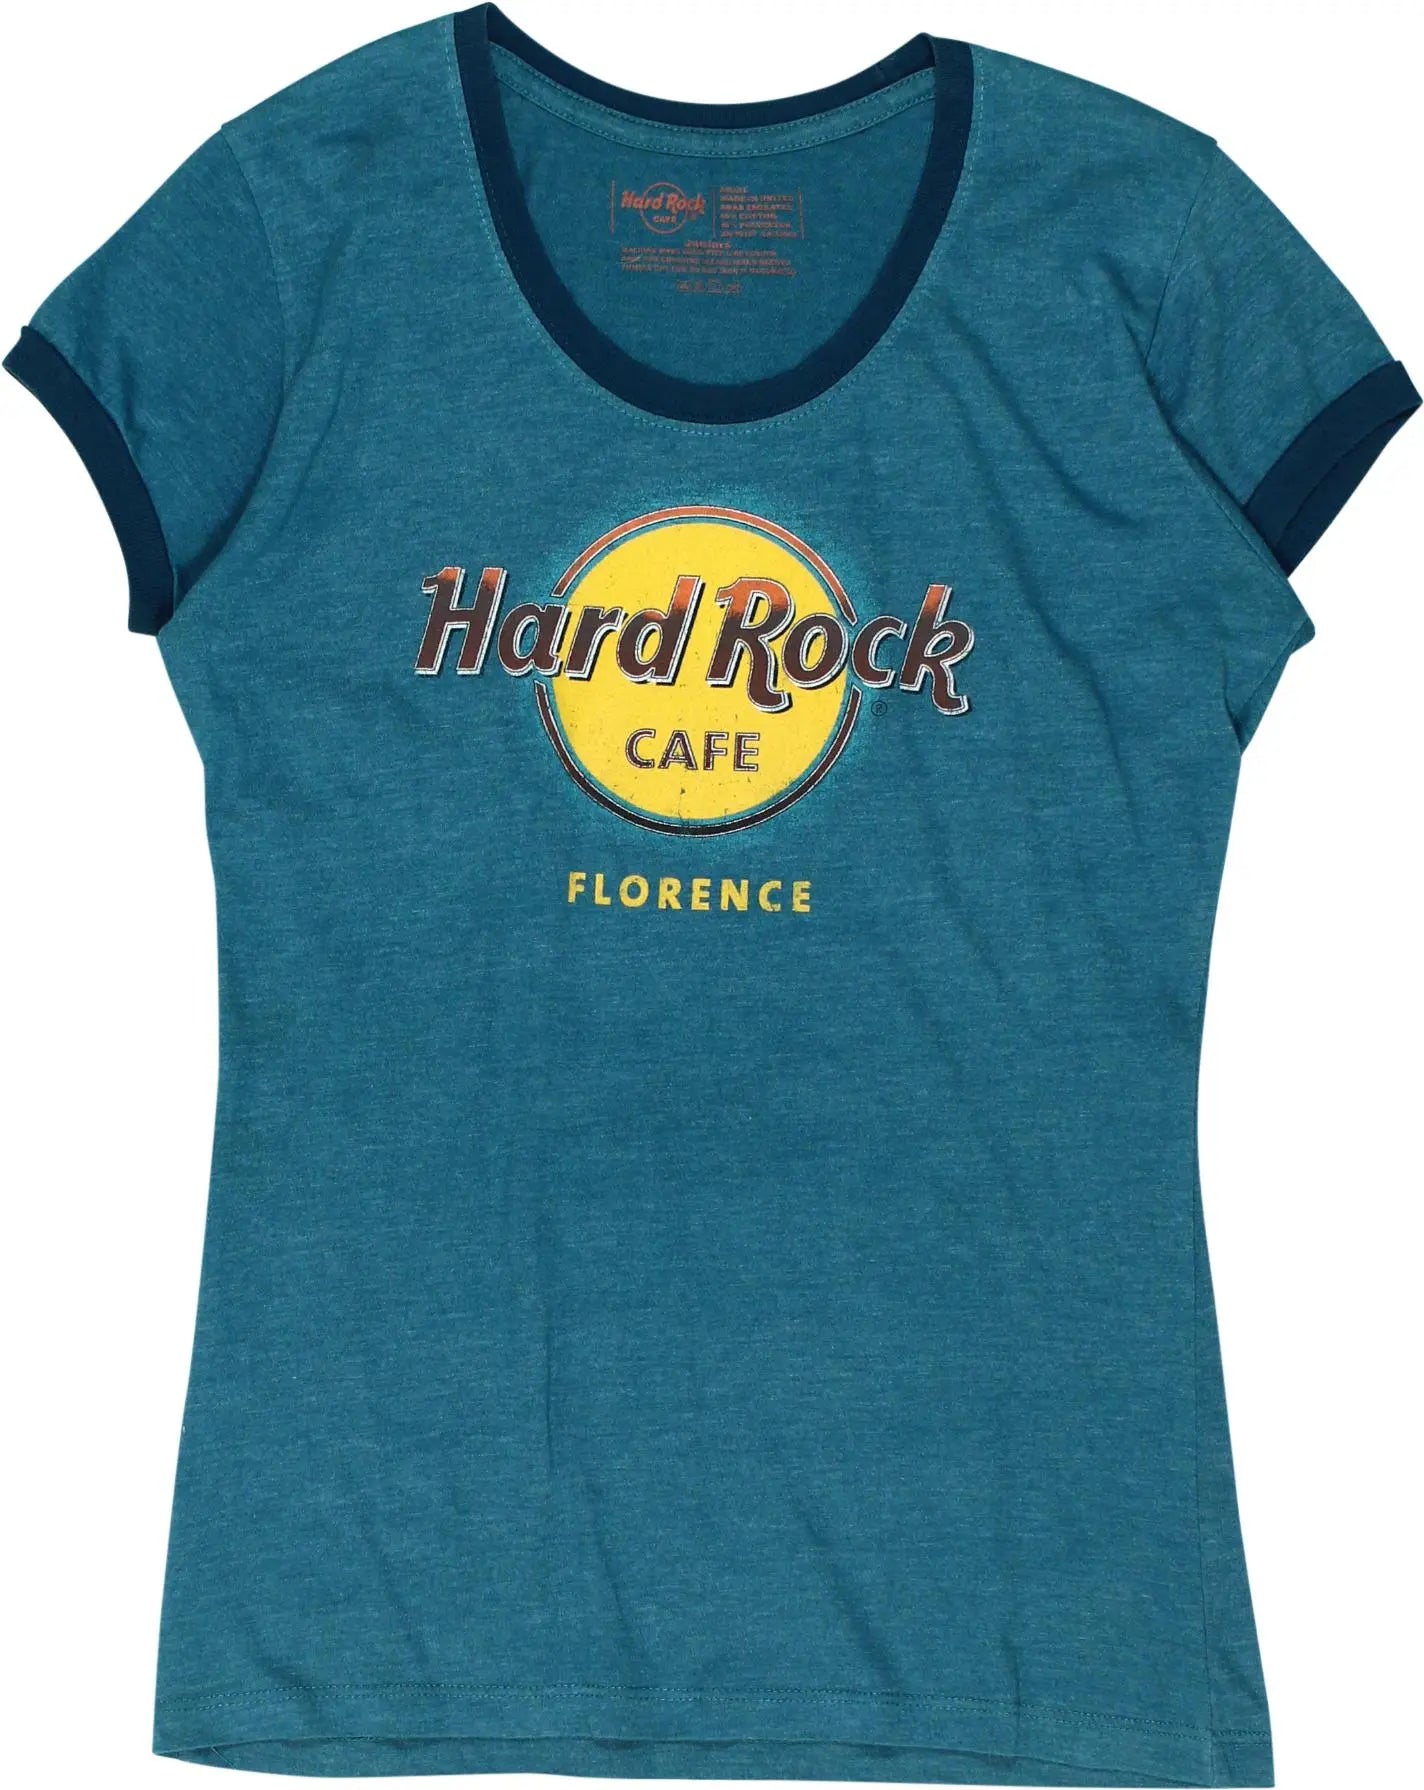 Hard Rock Cafe - Ringer T-Shirt by Hard Rock Cafe- ThriftTale.com - Vintage and second handclothing